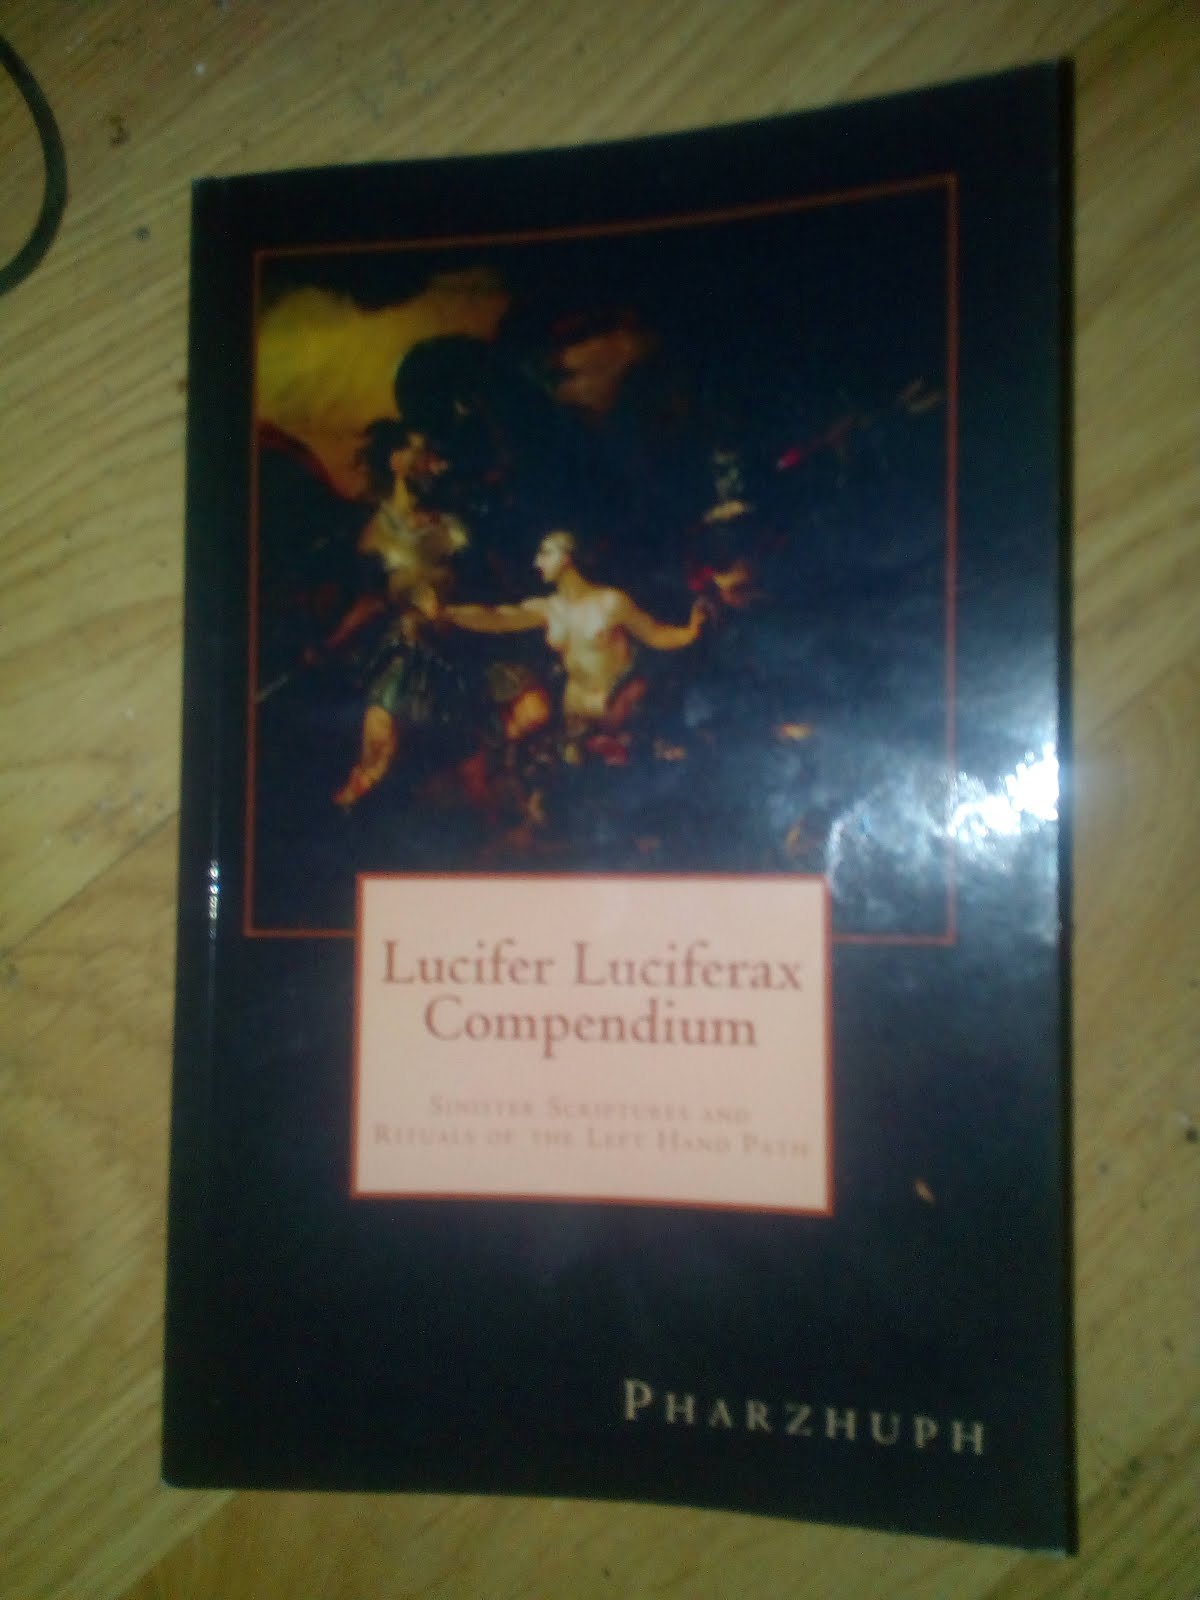 'Lucifer Luciferax Compendium' by Pharzhuph.